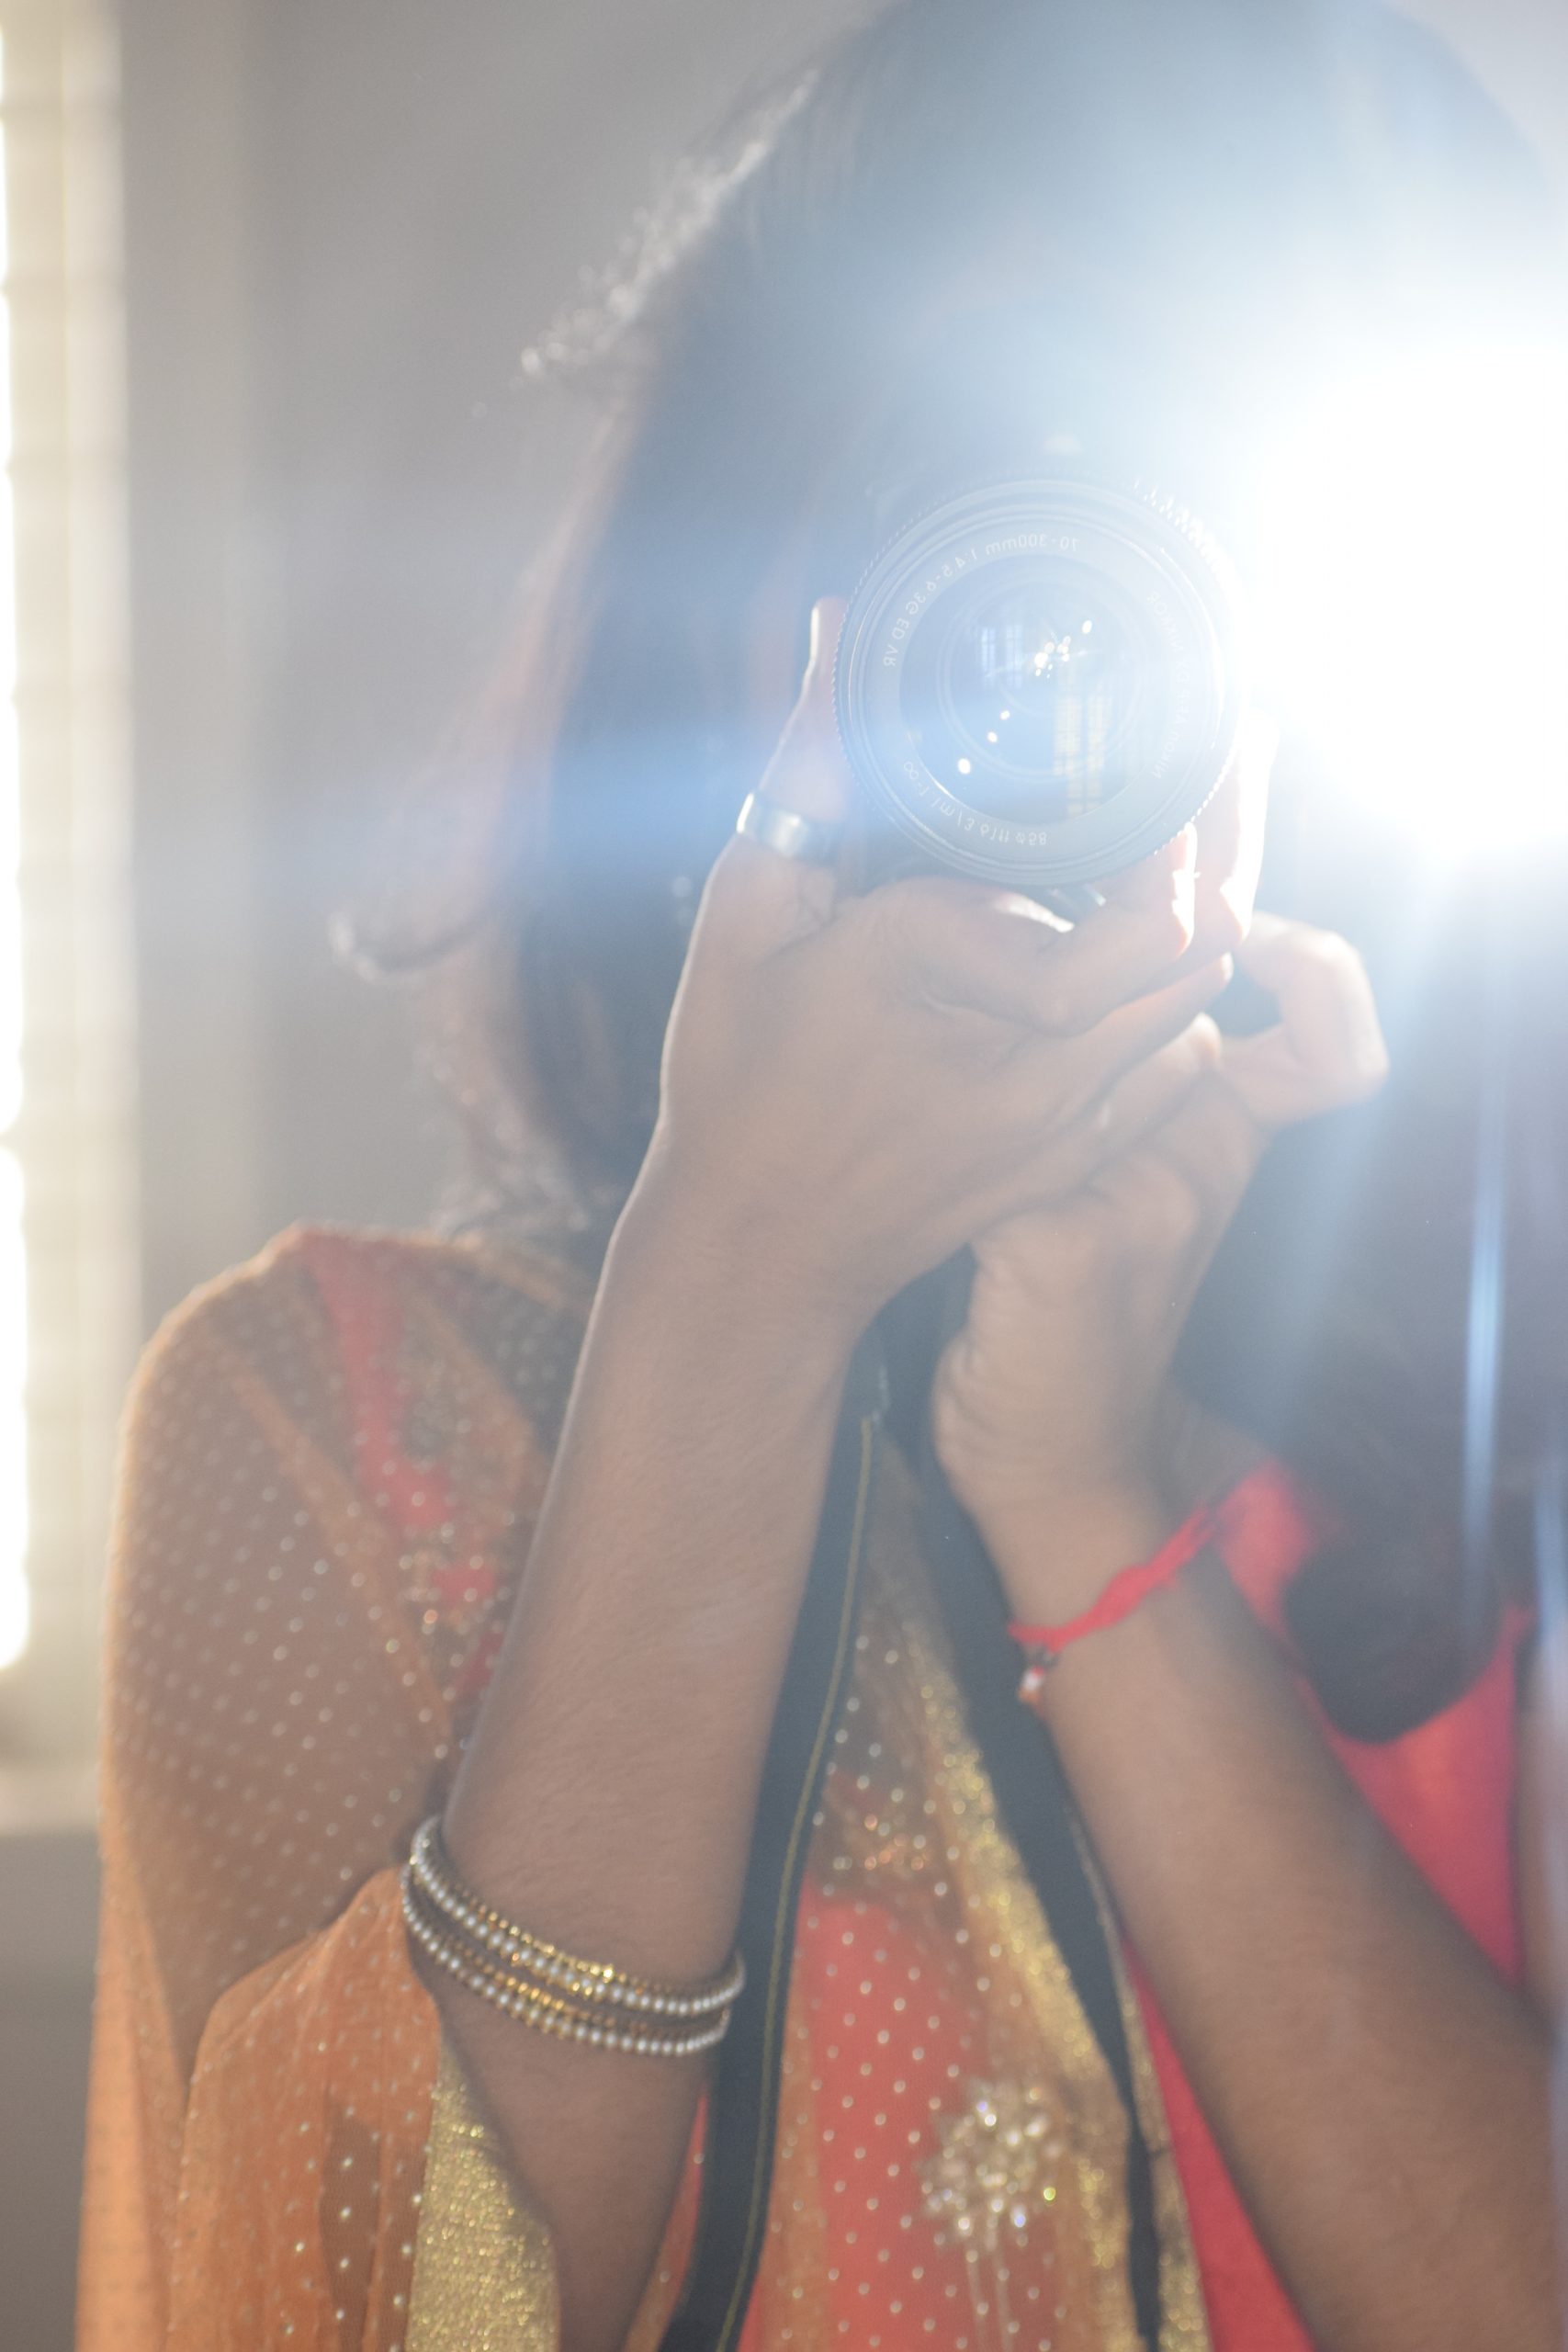 Woman using a camera